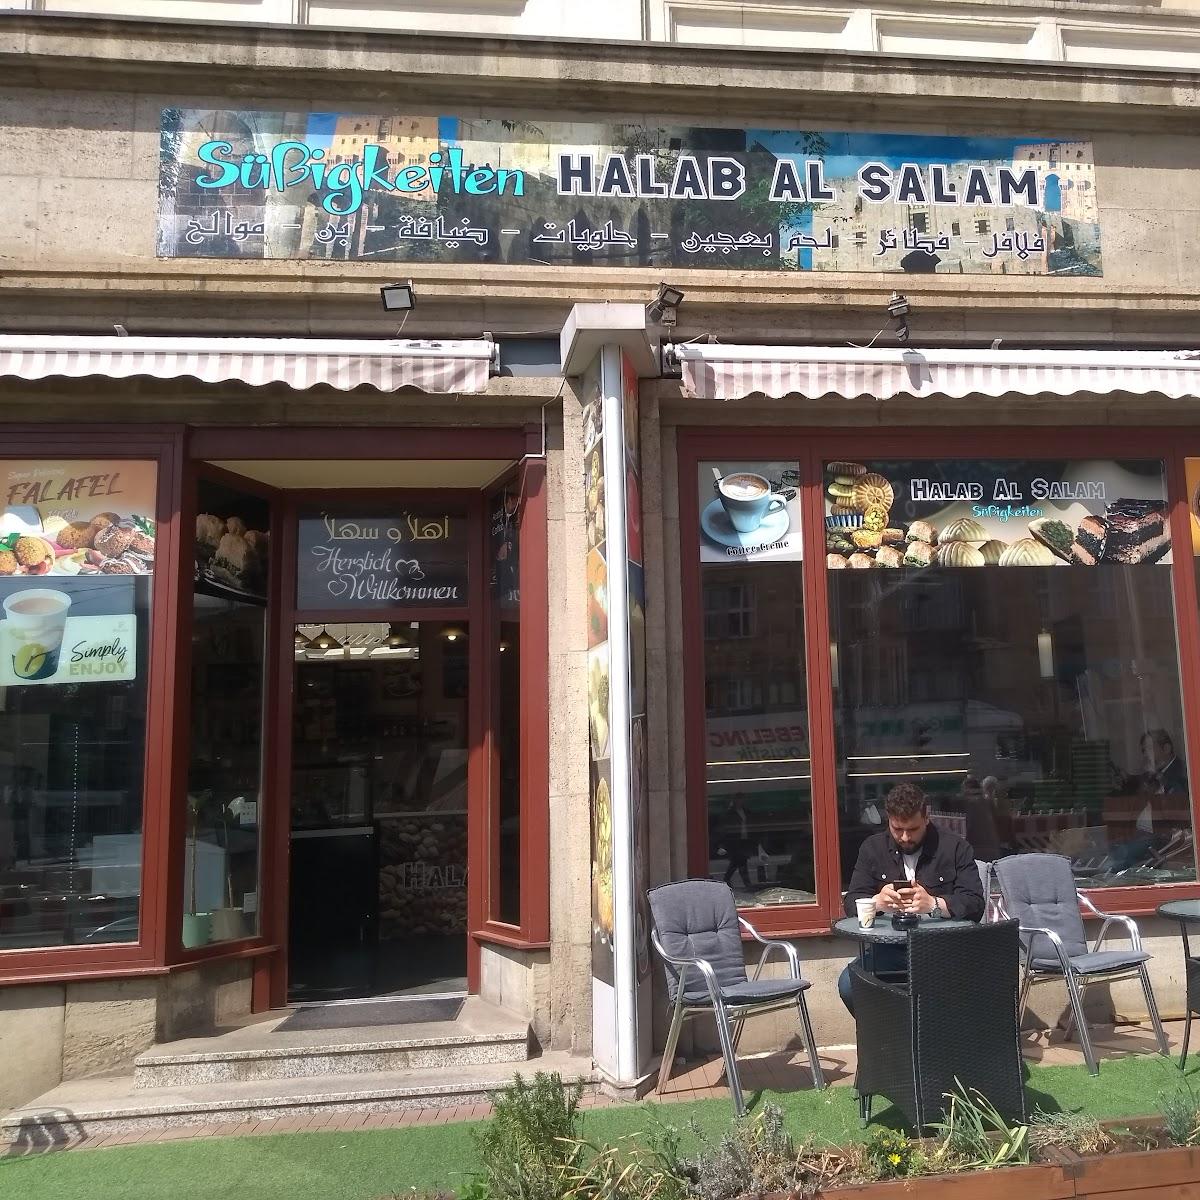 Restaurant "|| Halab Al Salam Süßigkeiten Nüsse Café" in Magdeburg